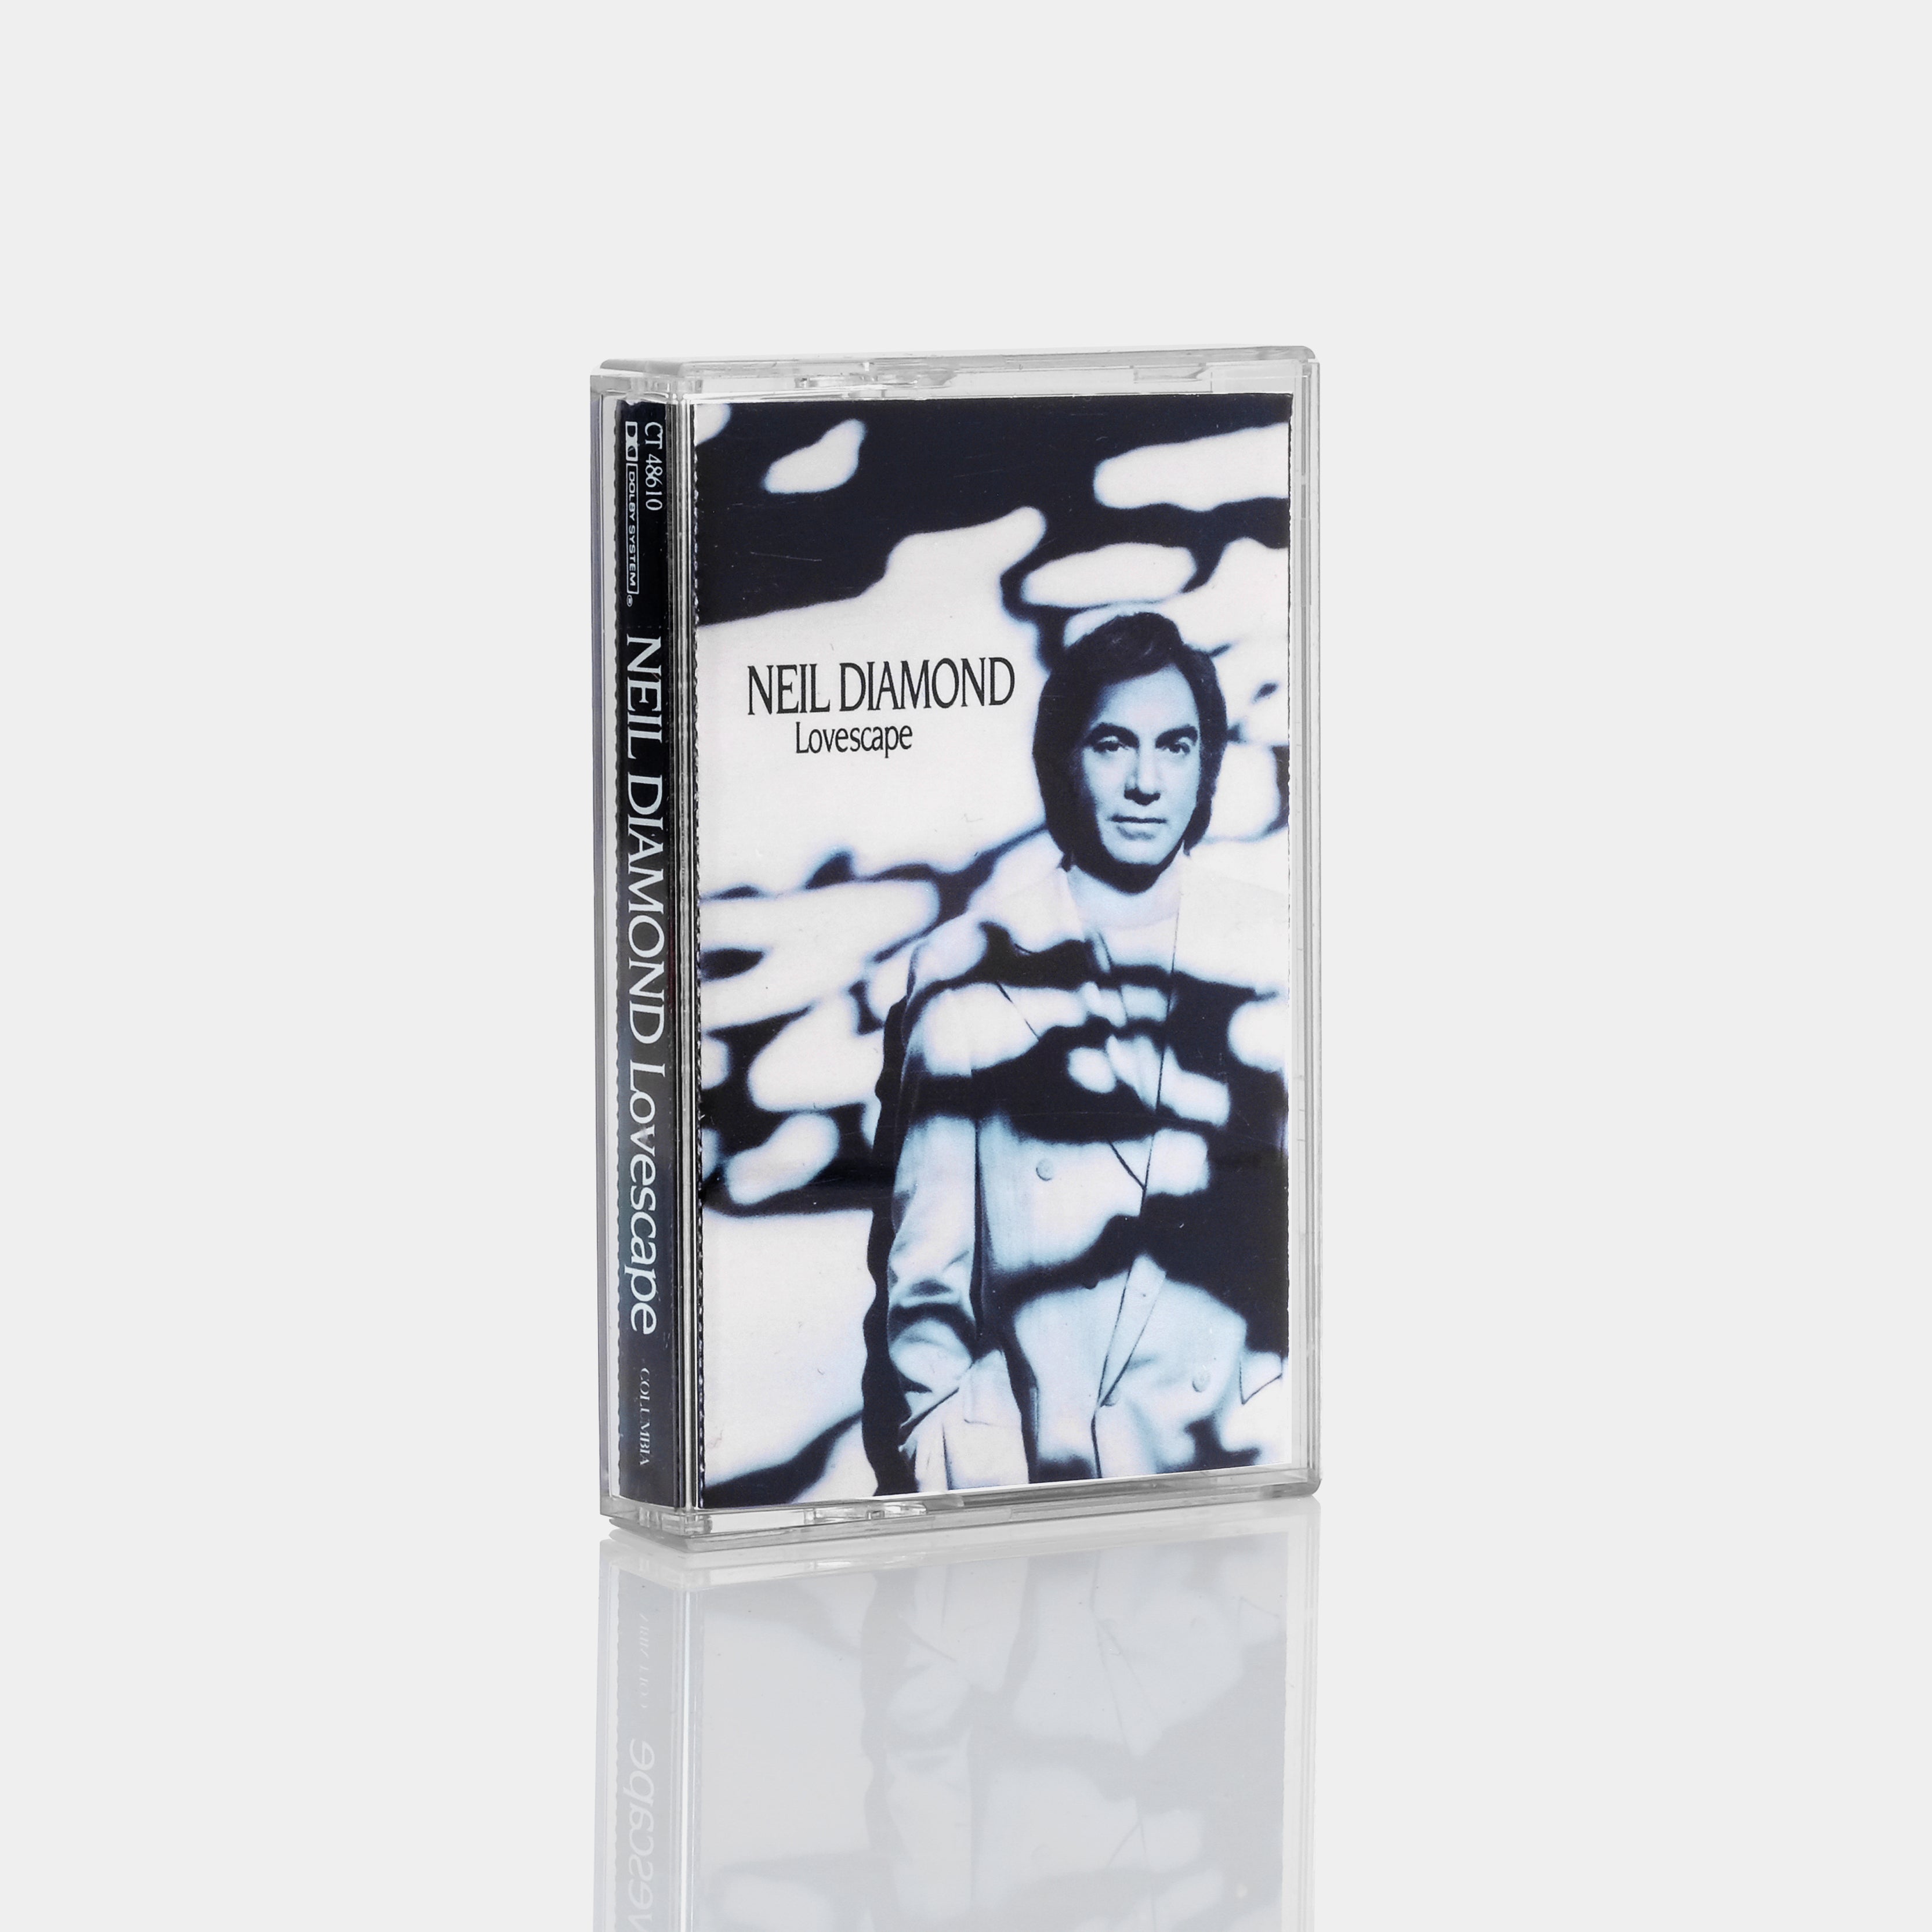 Neil Diamond - Lovescape Cassette Tape